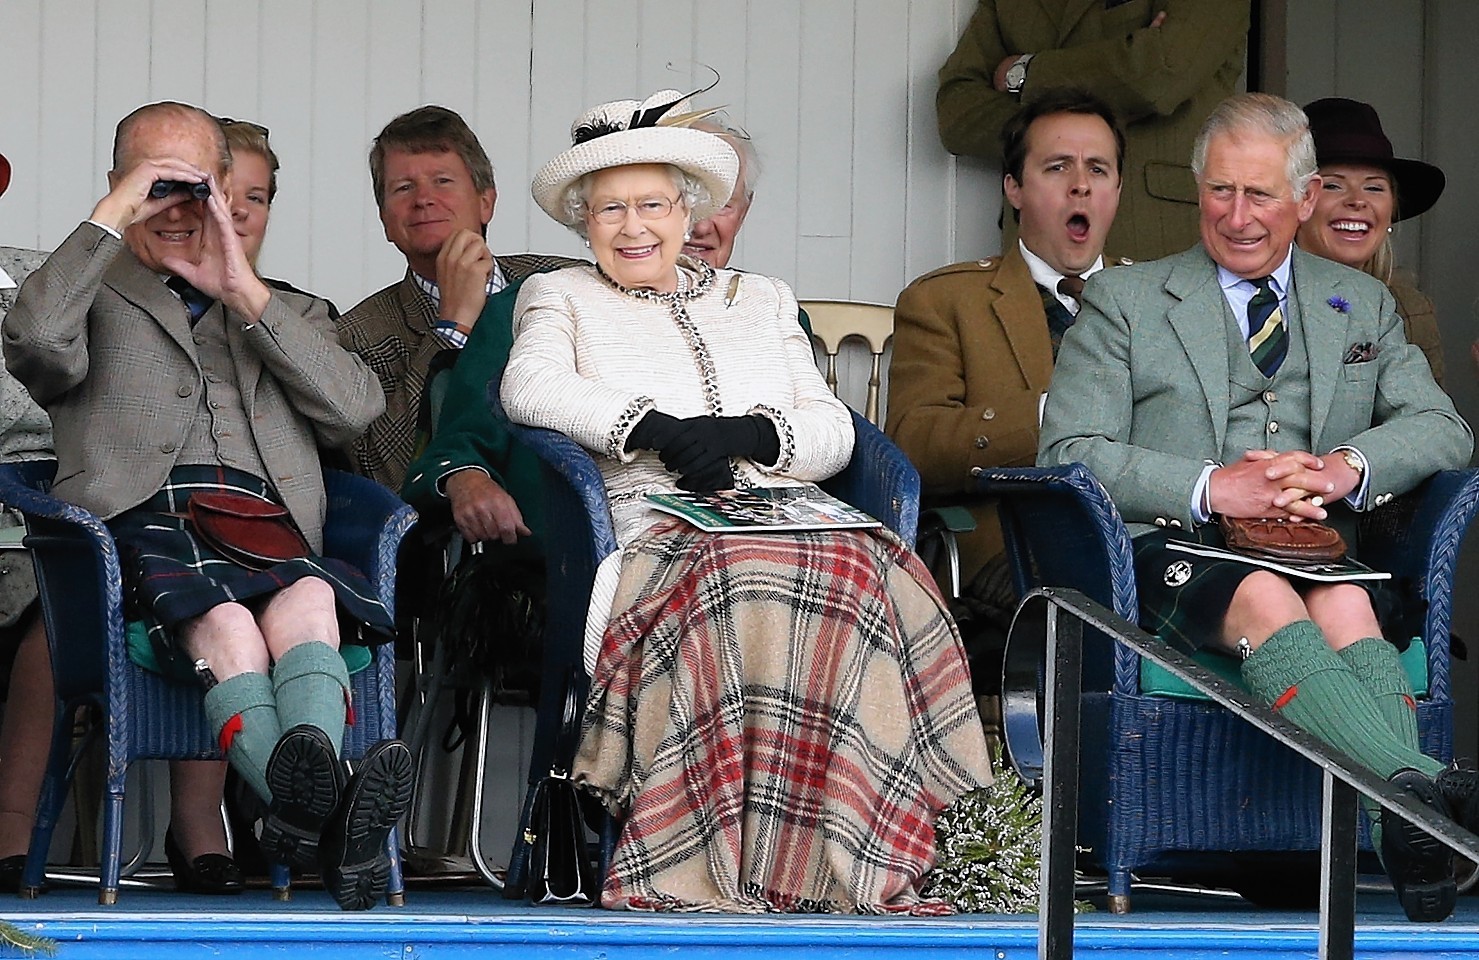 The Royal Family at last year's gathering